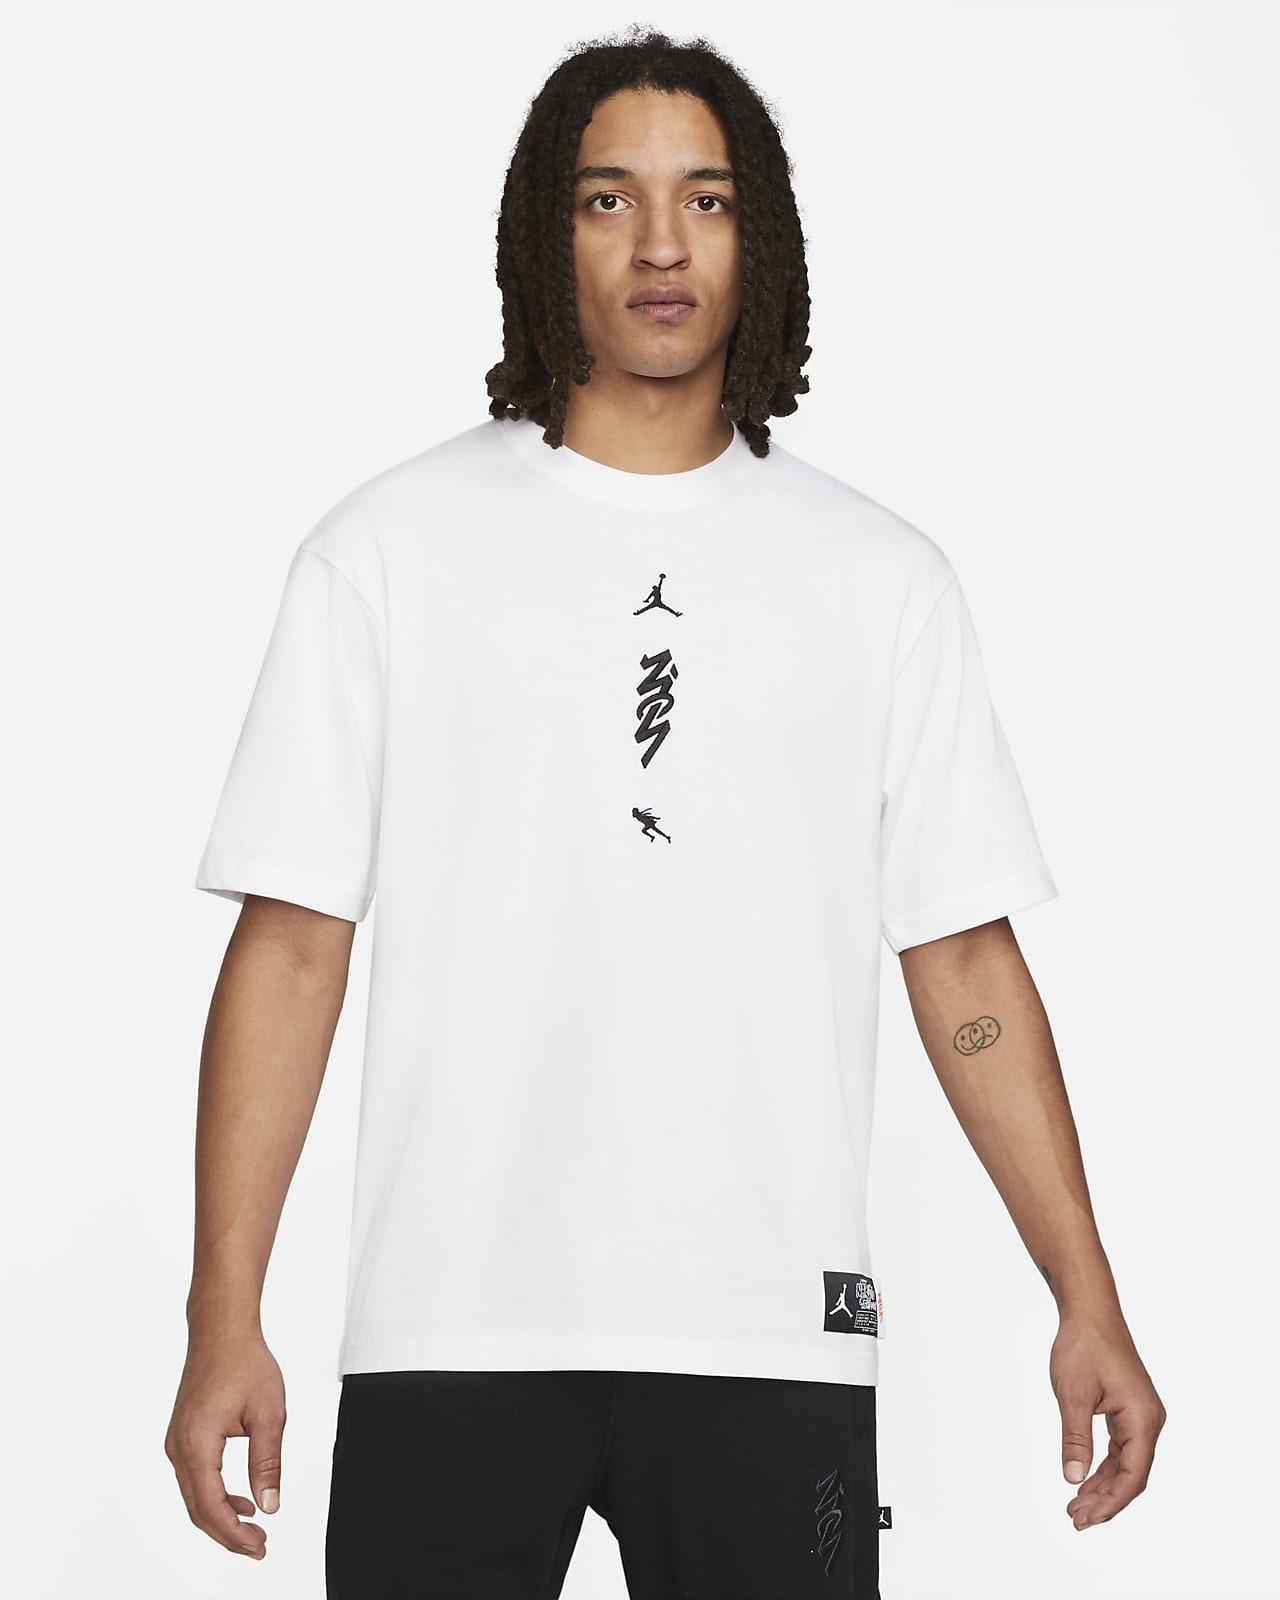 Zion x Naruto Men's T-shirt